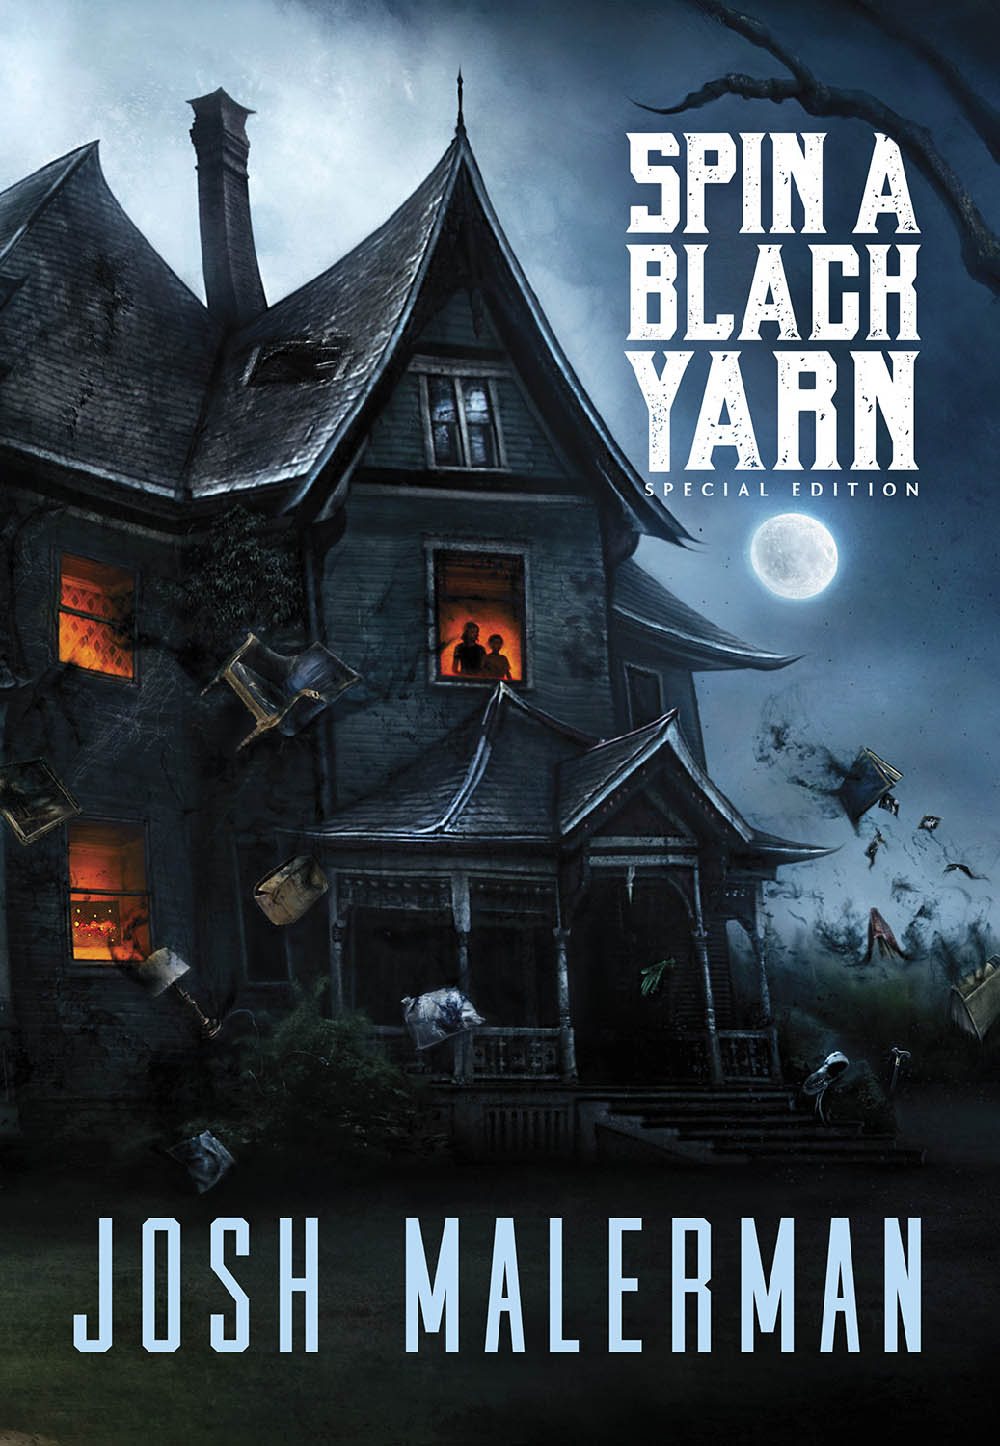 Spin a Black Yarn Special Edition by Josh Malerman (PREORDER)